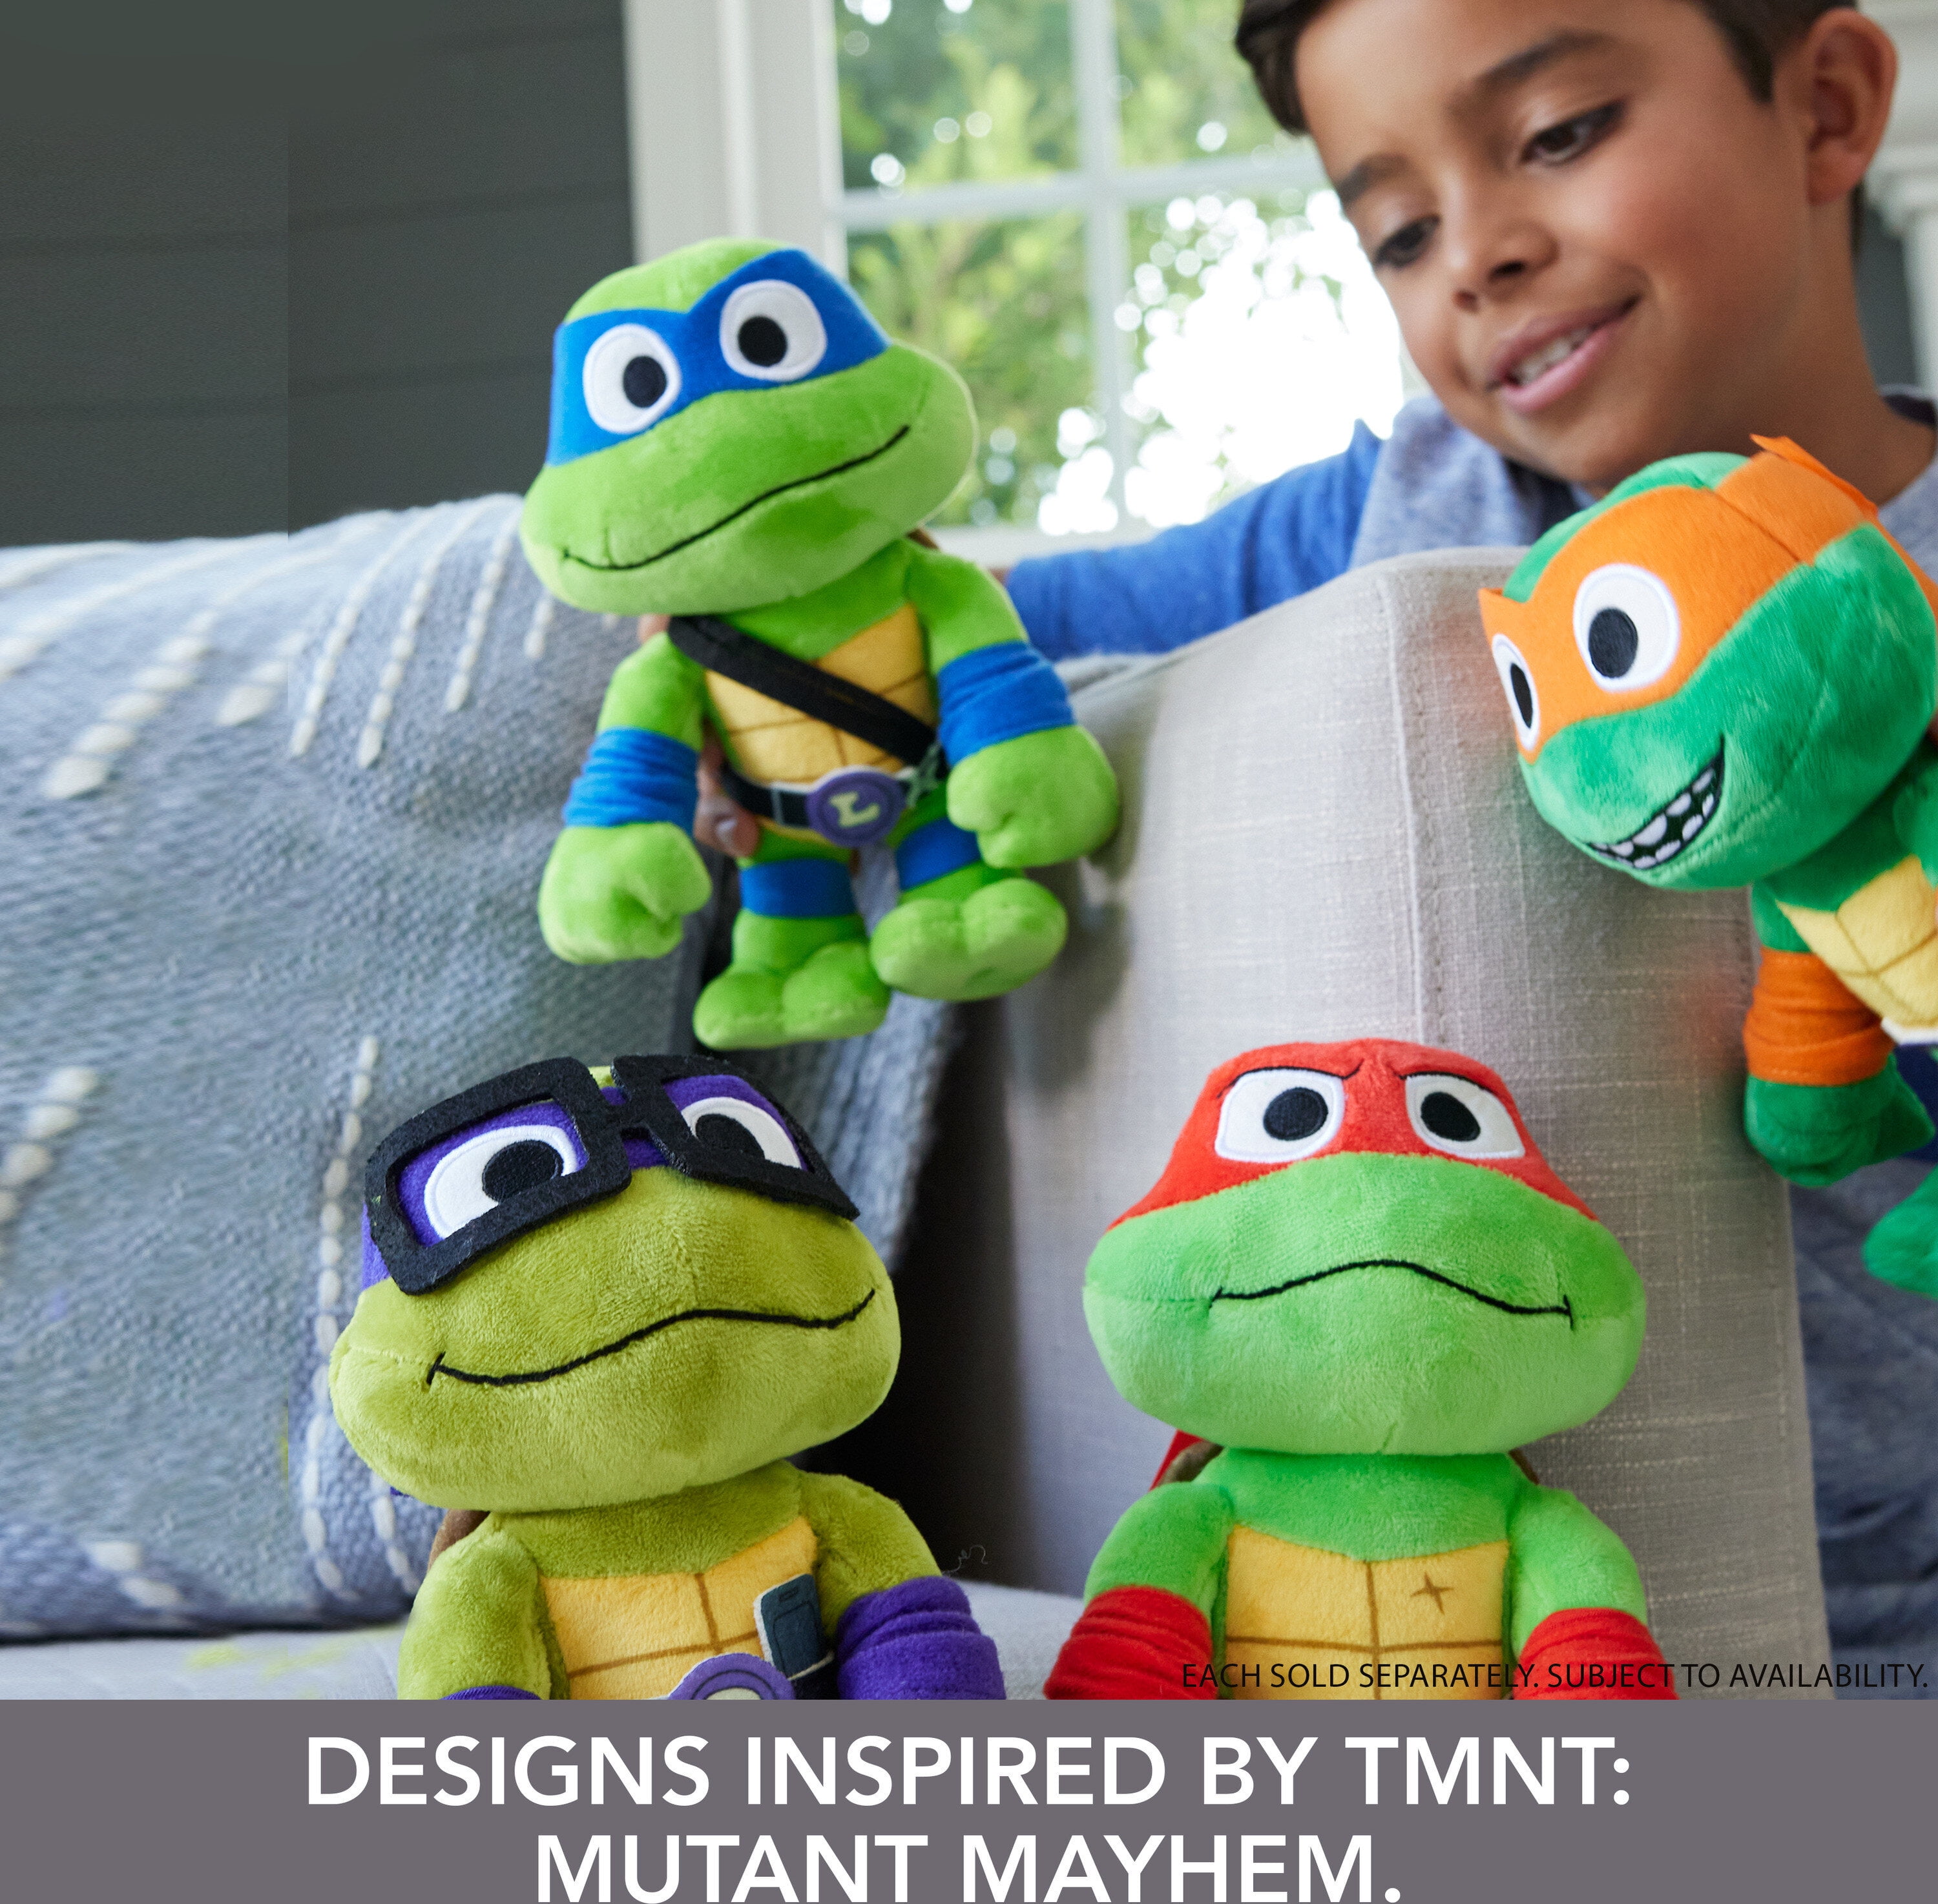  Mattel Teenage Mutant Ninja Turtles: Mutant Mayhem Plush Toys  Cuutopia, 10 Inch Rounded Michelangelo Kawaii-Style Plush, Orange Masked  Mikey : Toys & Games